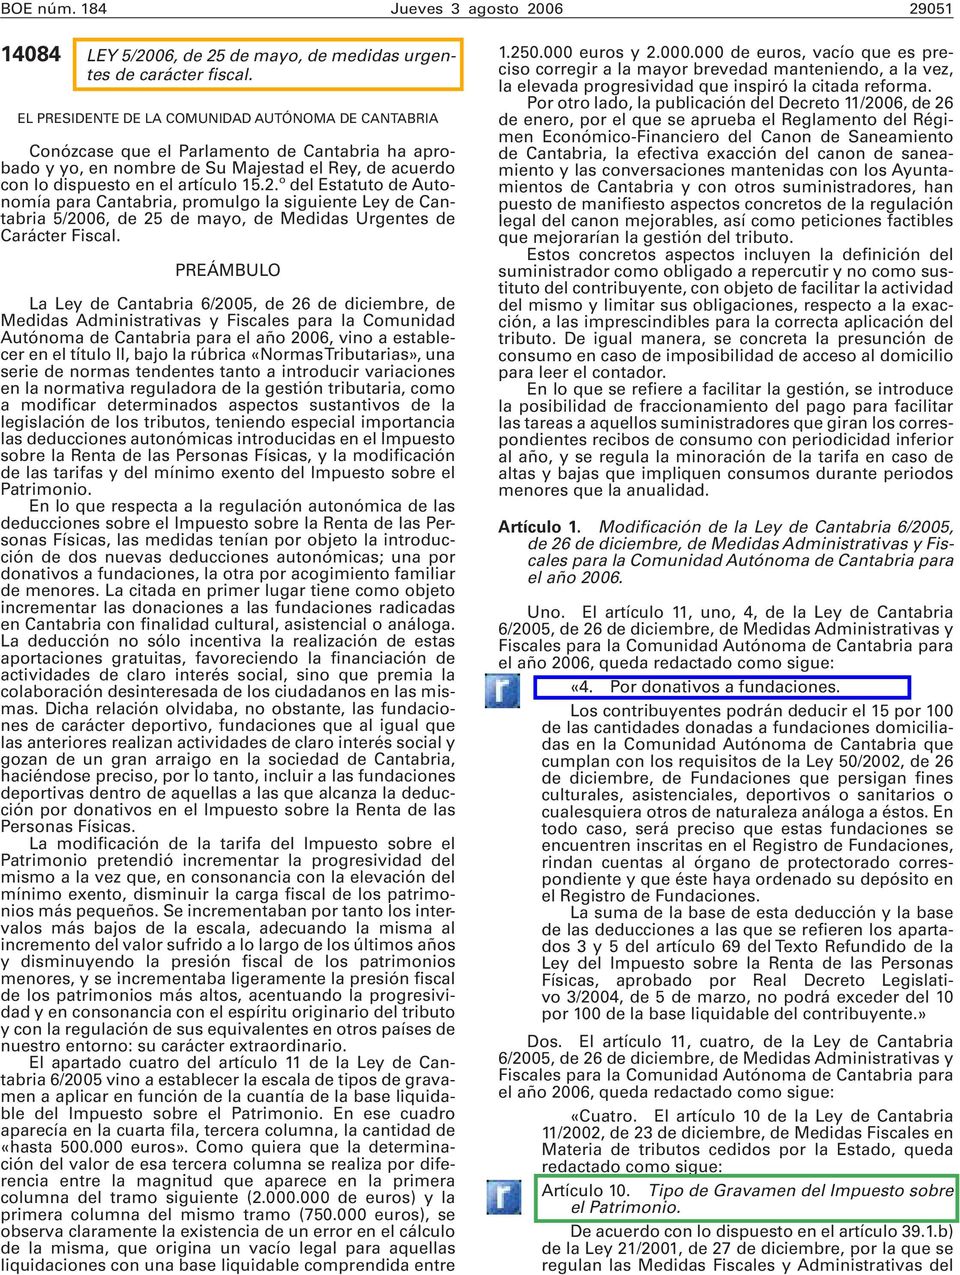 º del Estatuto de Autonomía para Cantabria, promulgo la siguiente Ley de Cantabria 5/2006, de 25 de mayo, de Medidas Urgentes de Carácter Fiscal.